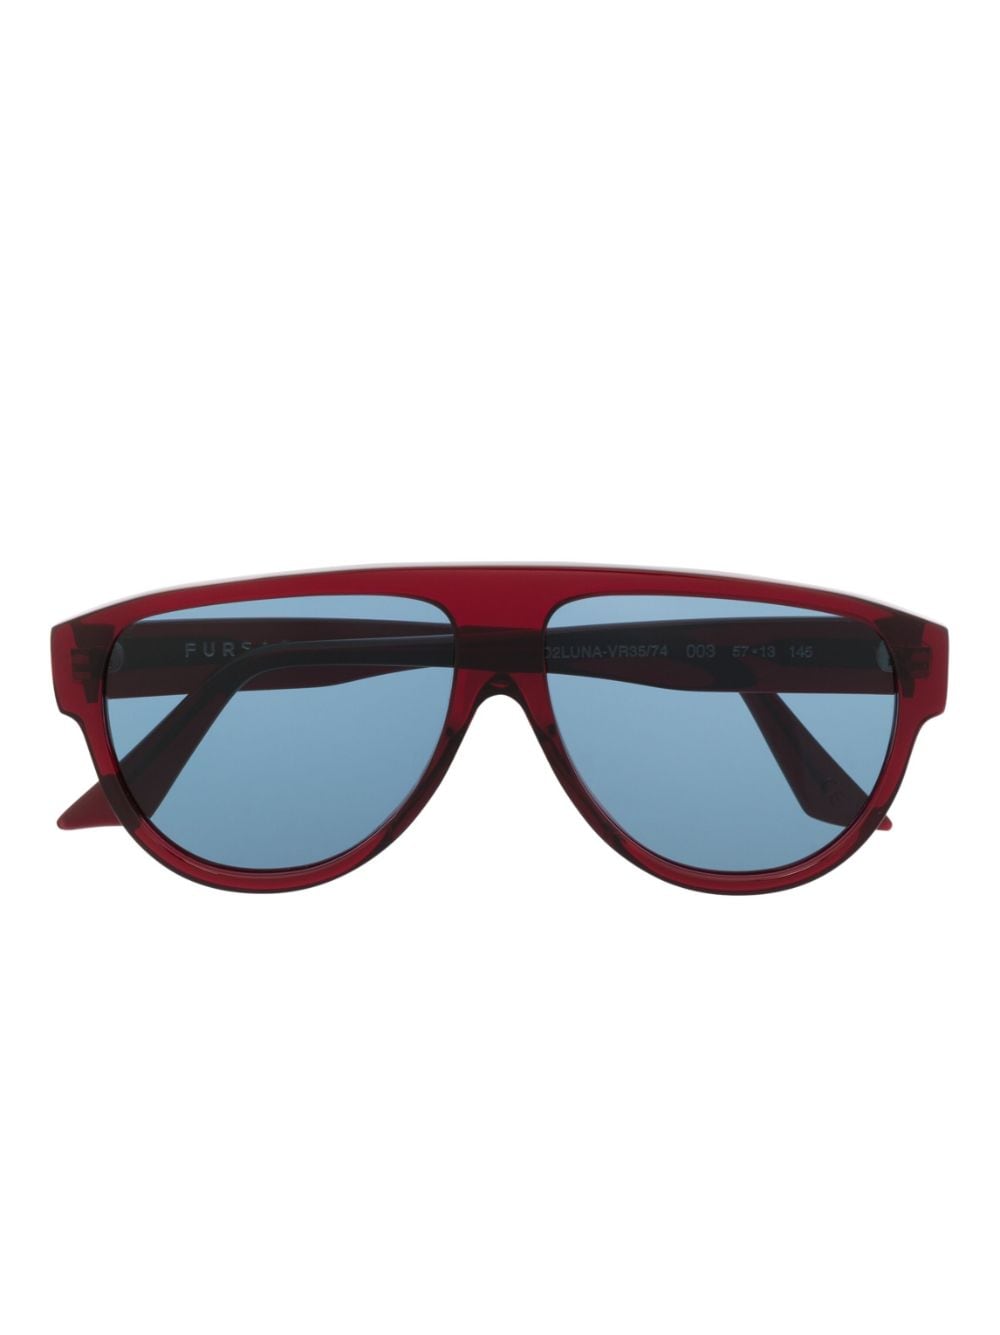 FURSAC acetate pilot-frame sunglasses - Red von FURSAC